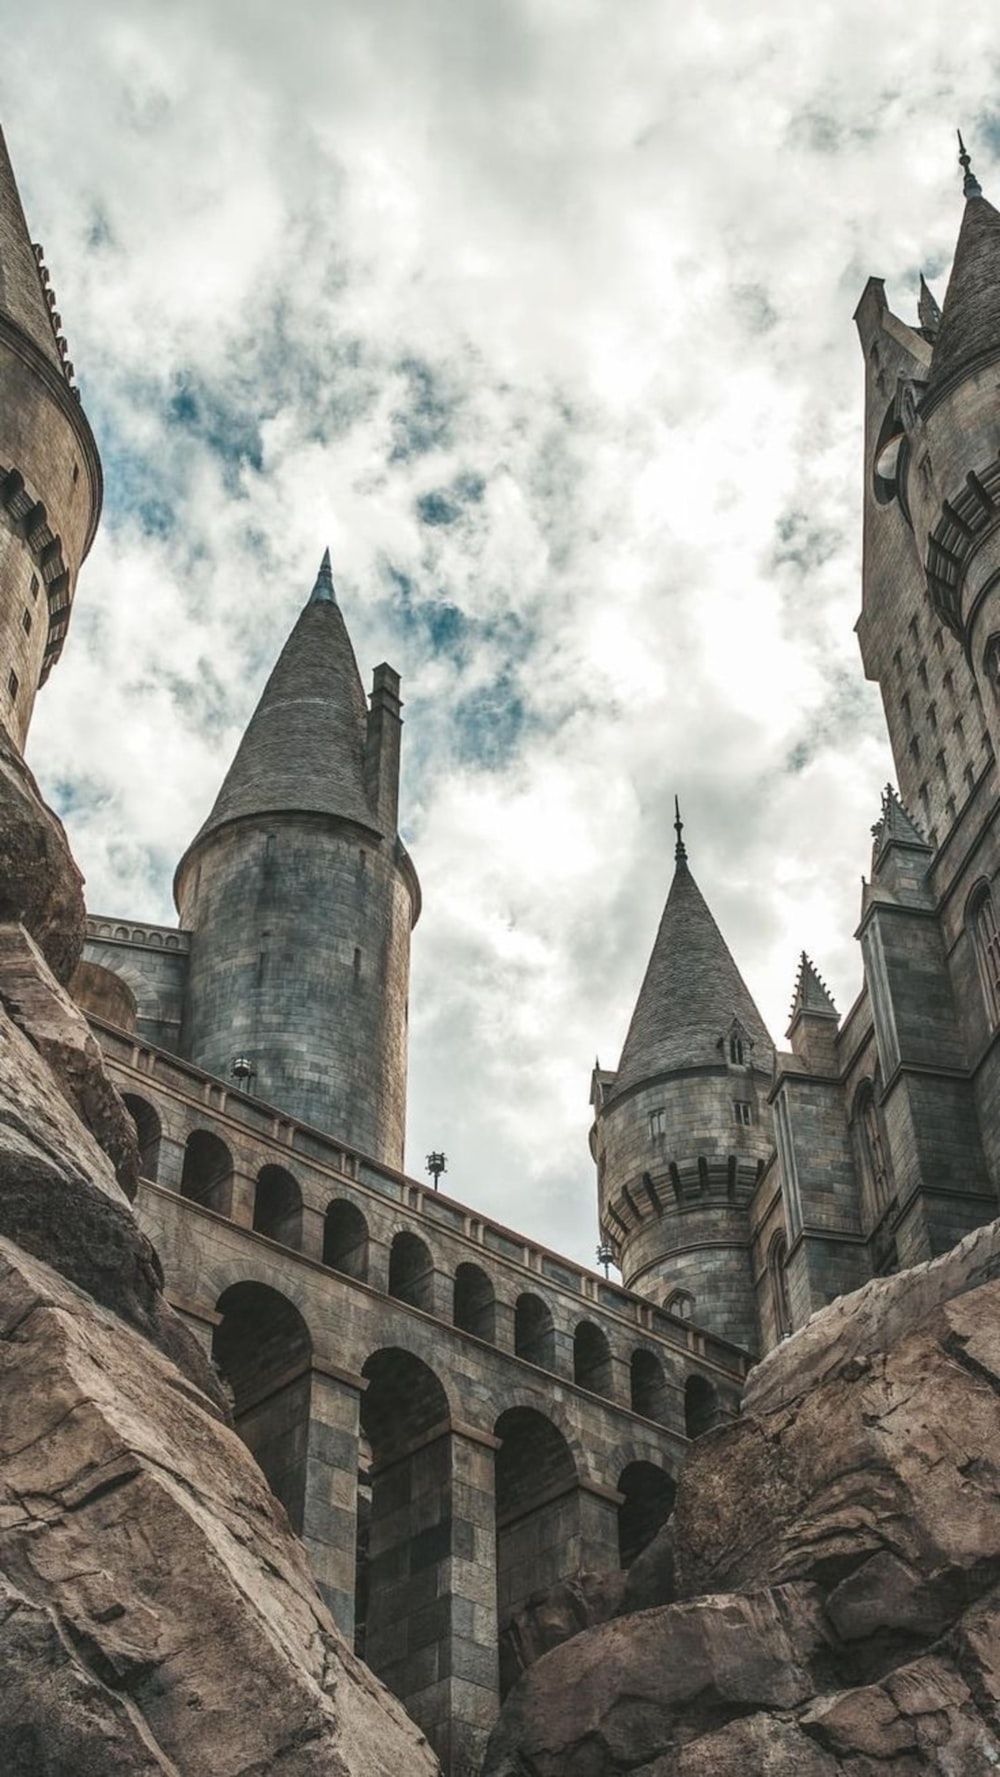 Hogwarts Castle Picture. Download Free Image